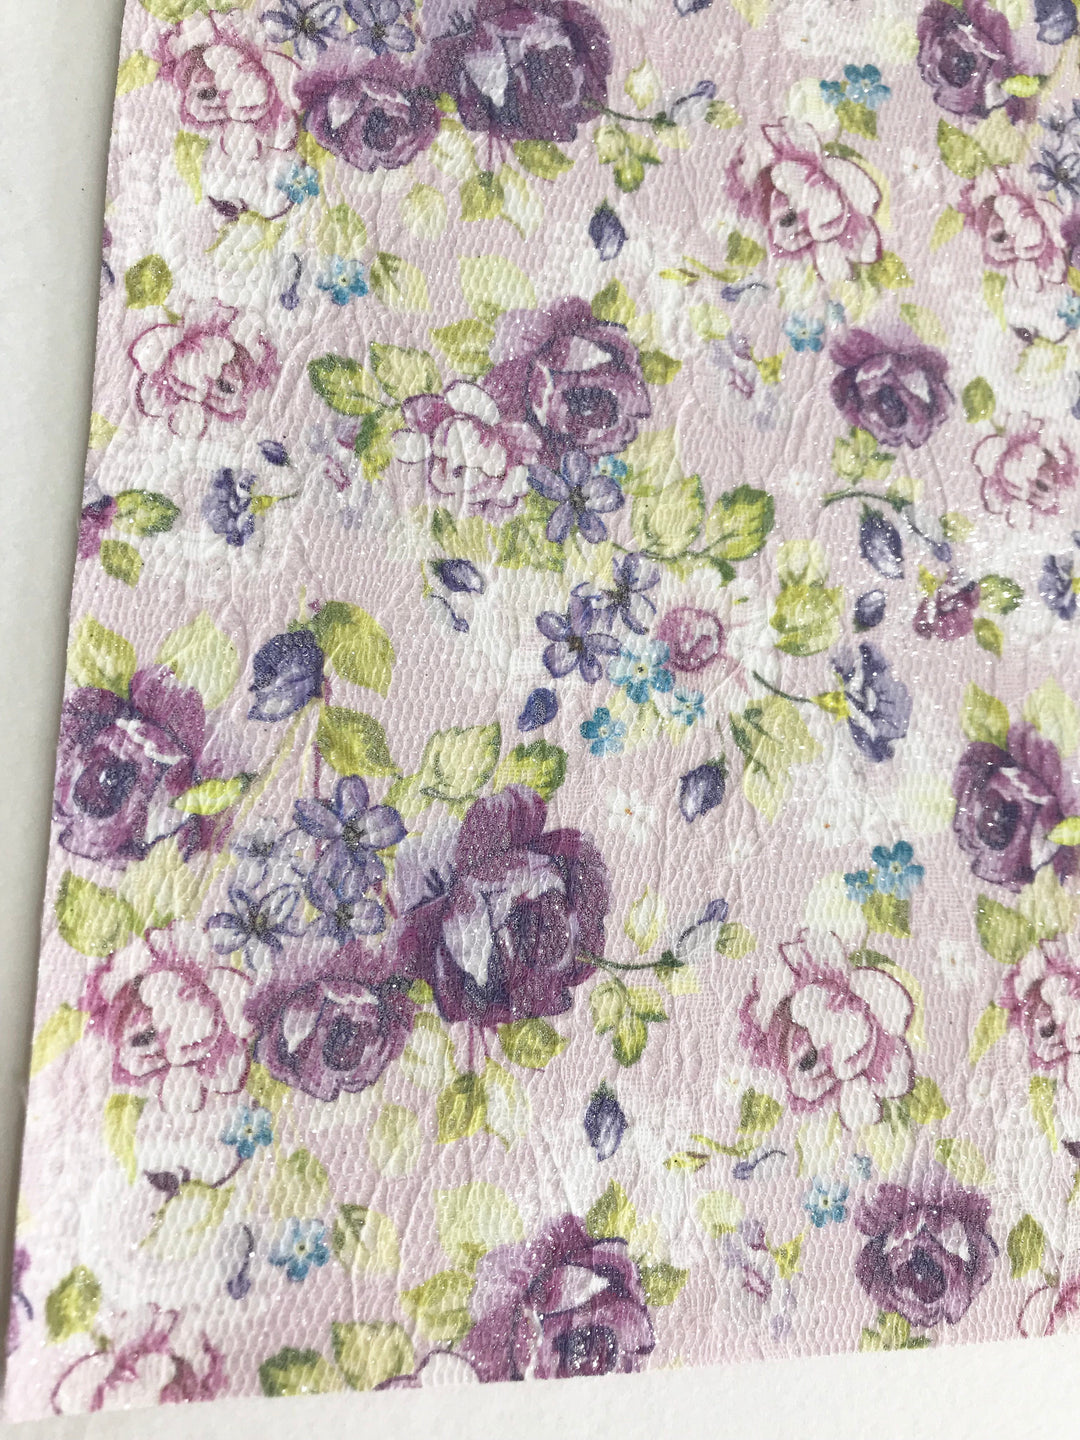 Floral Glitter Lace Fabric Sheet A4 - Glitter Lace